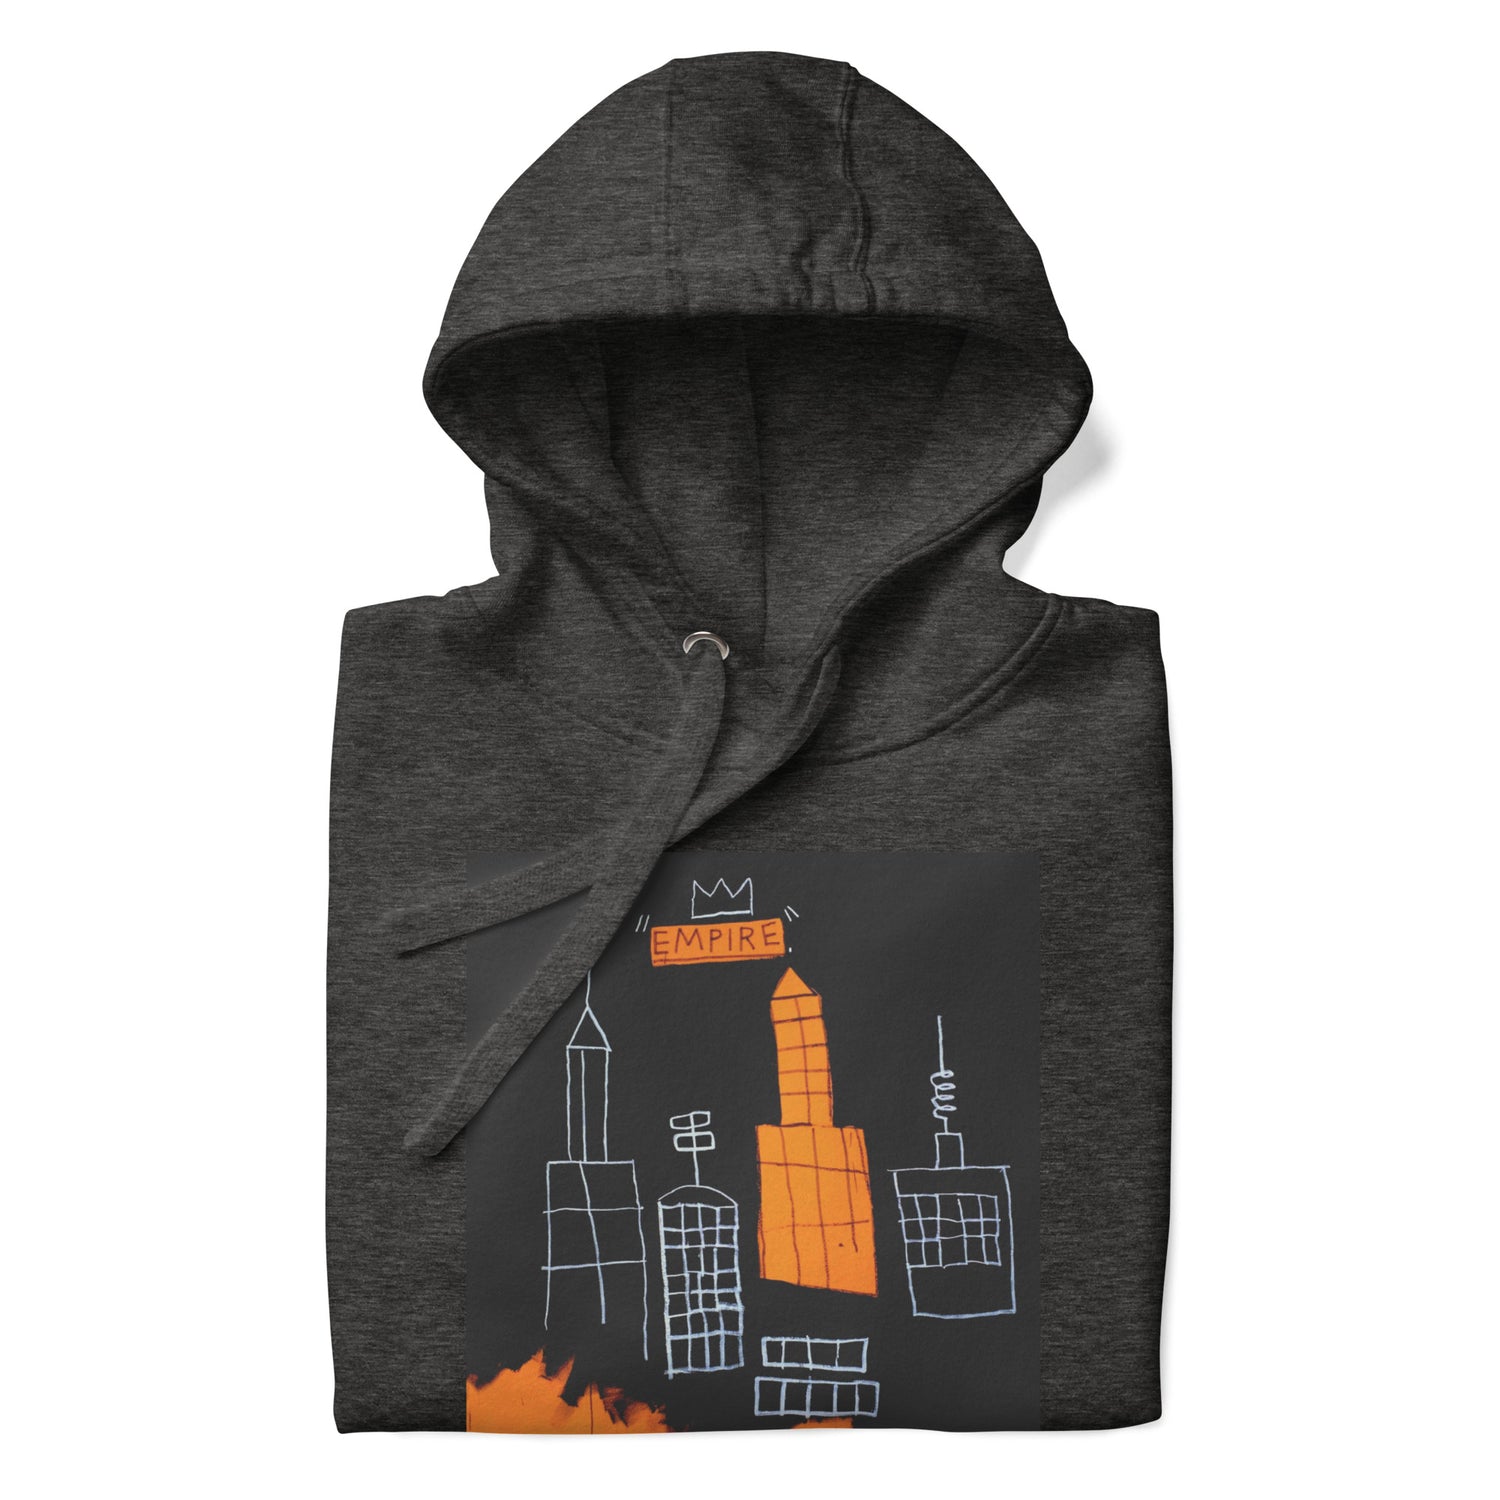 Jean-Michel Basquiat "Mecca" Artwork Printed Premium Streetwear Sweatshirt Hoodie Charcoal Grey